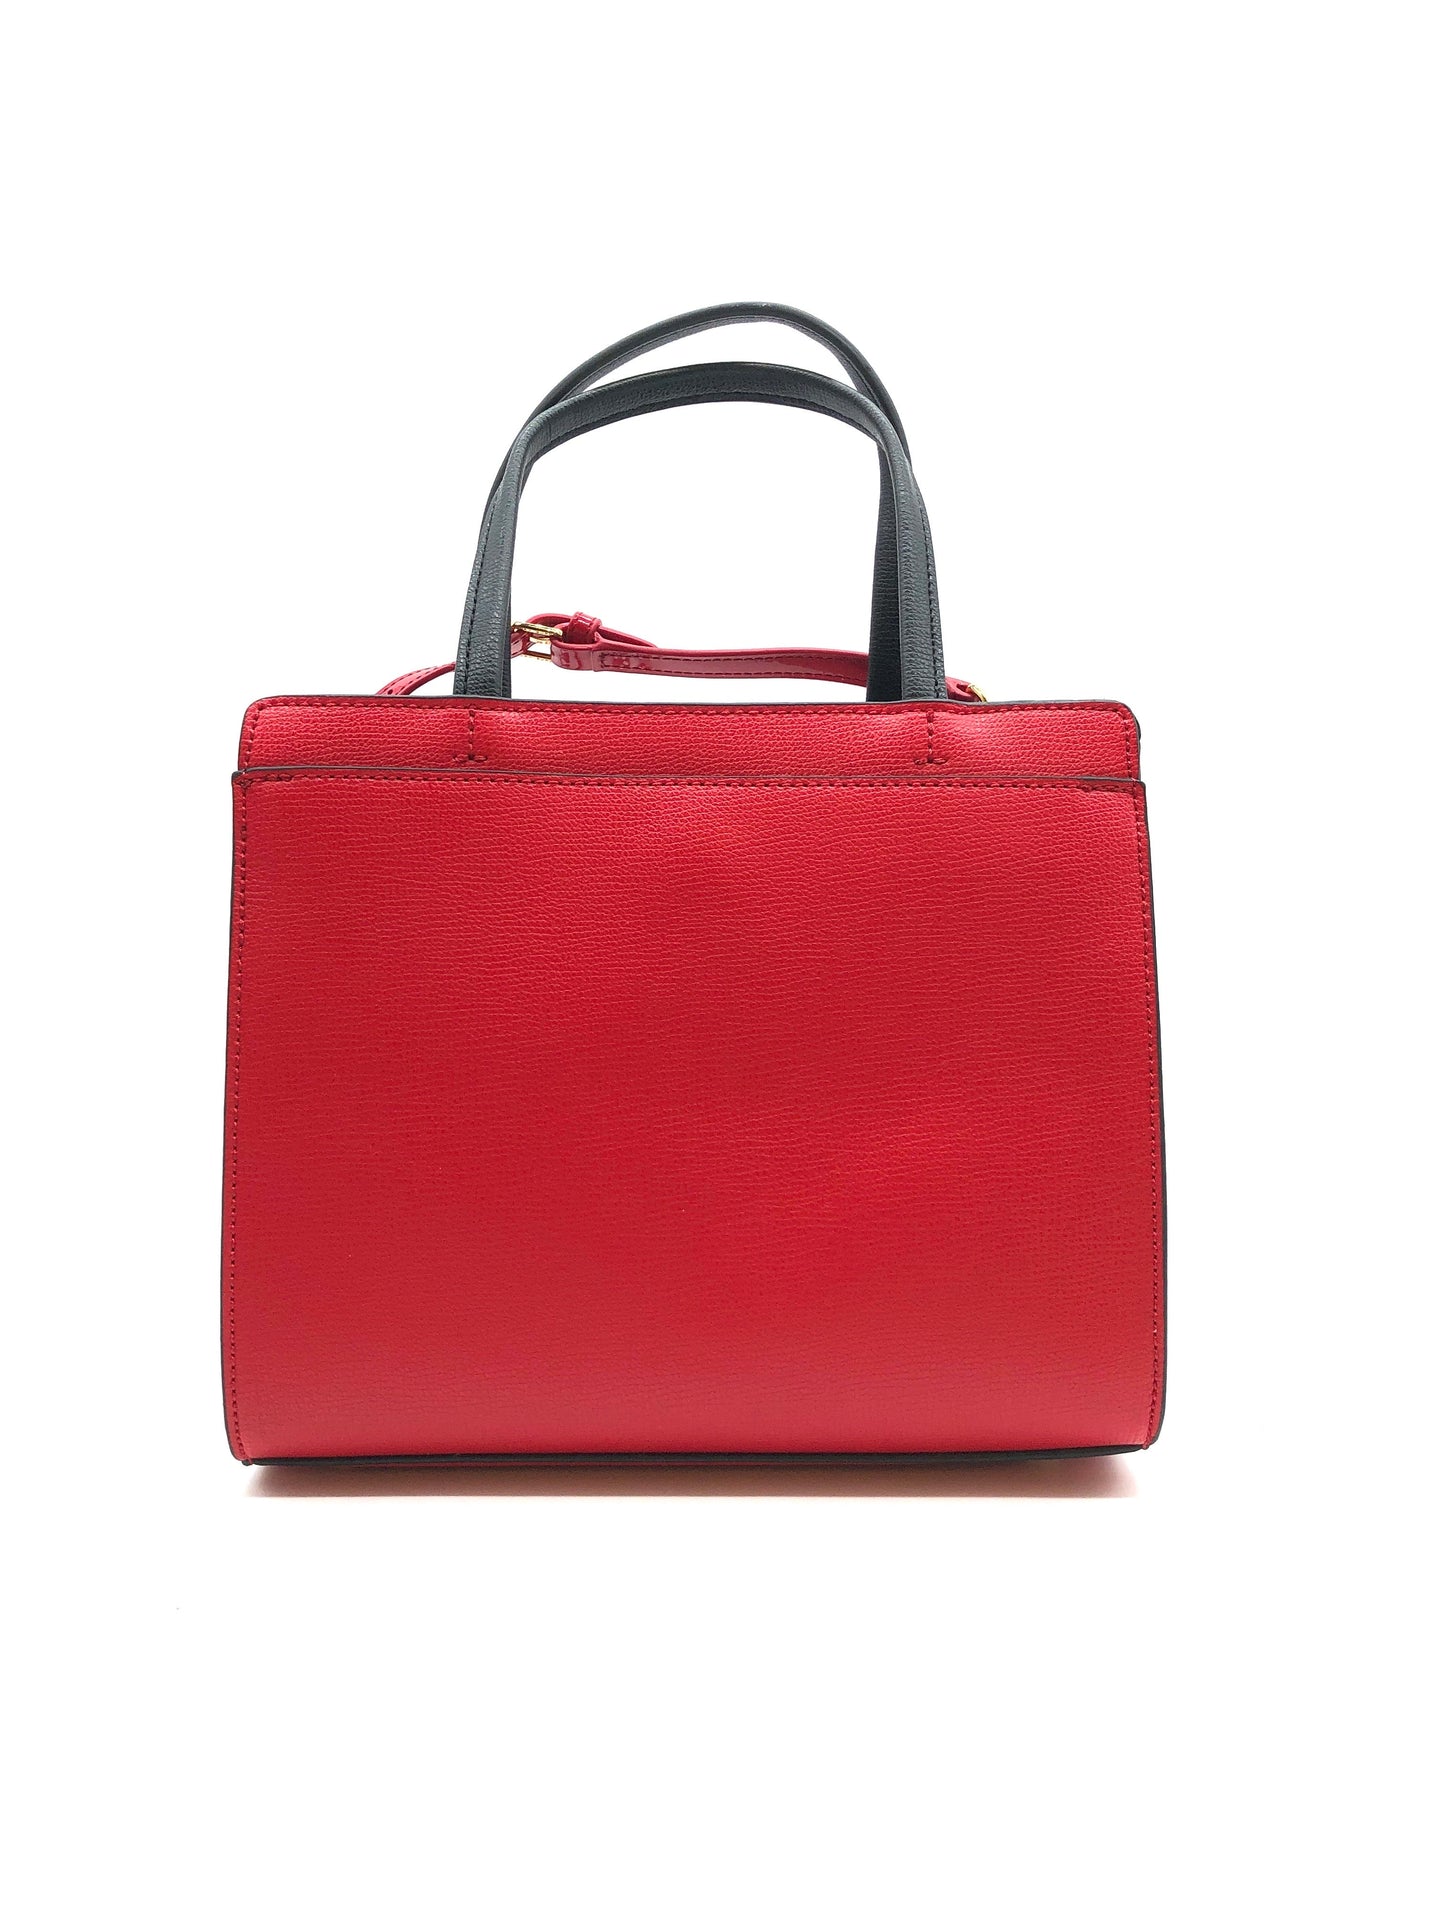 Handbag Designer Karl Lagerfeld, Size Medium